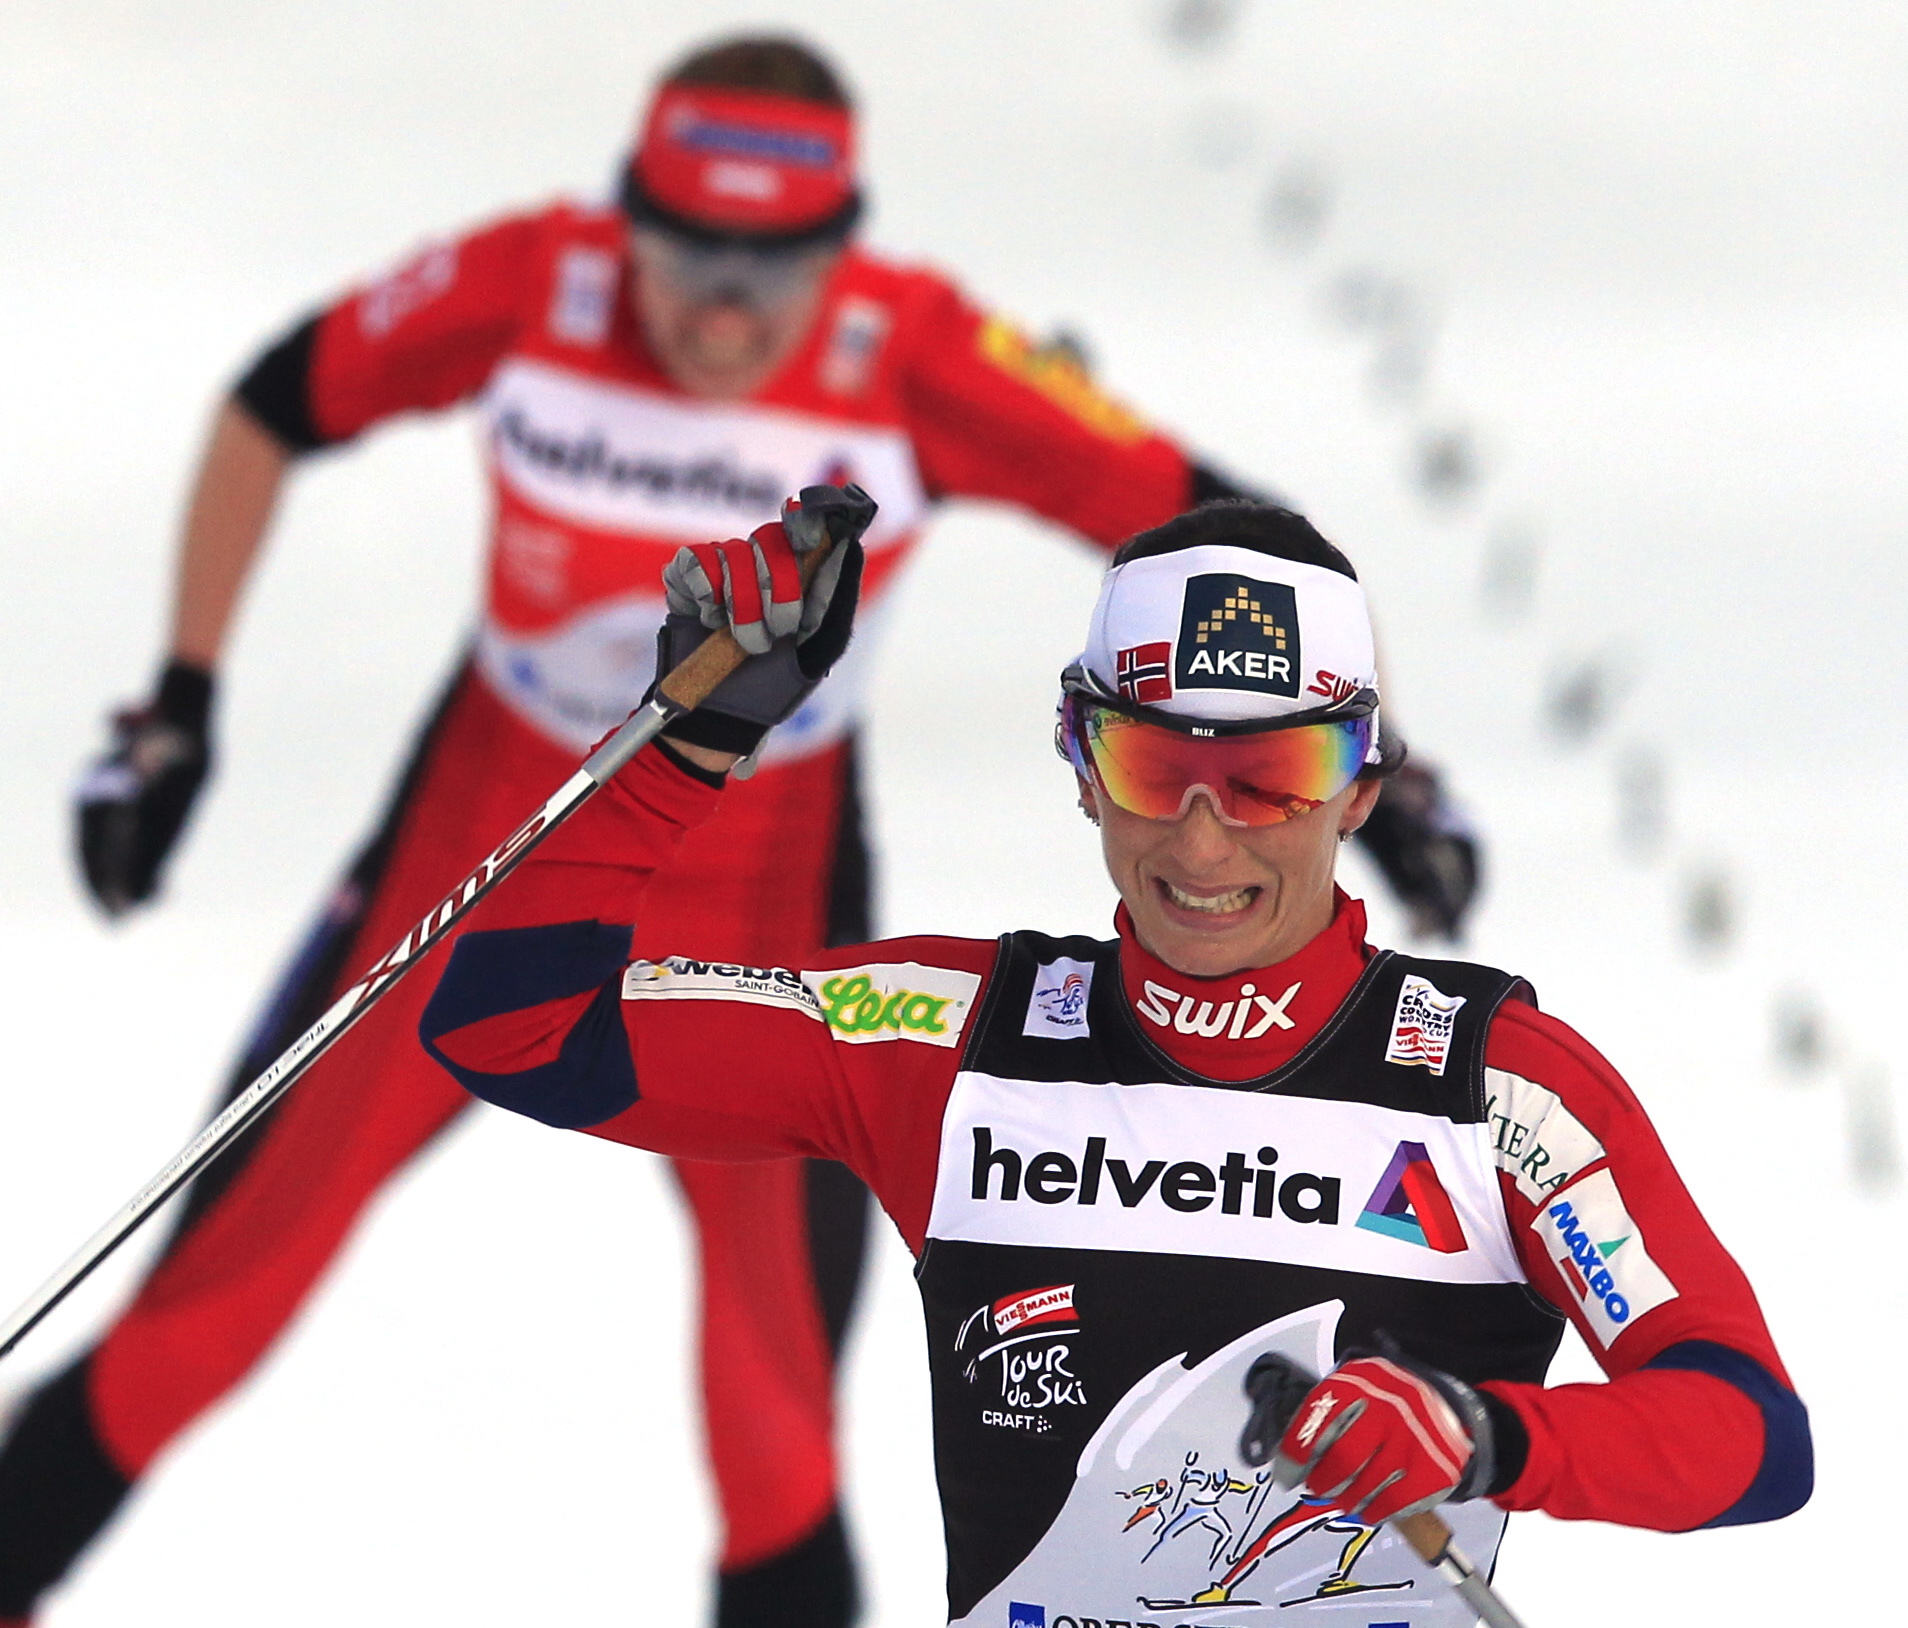 Tour de Ski, Längdskidor, Teodor Petersson, Justyna Kowalczyk, Marcus Hellner, Charlotte Kalla, Marit Björgen